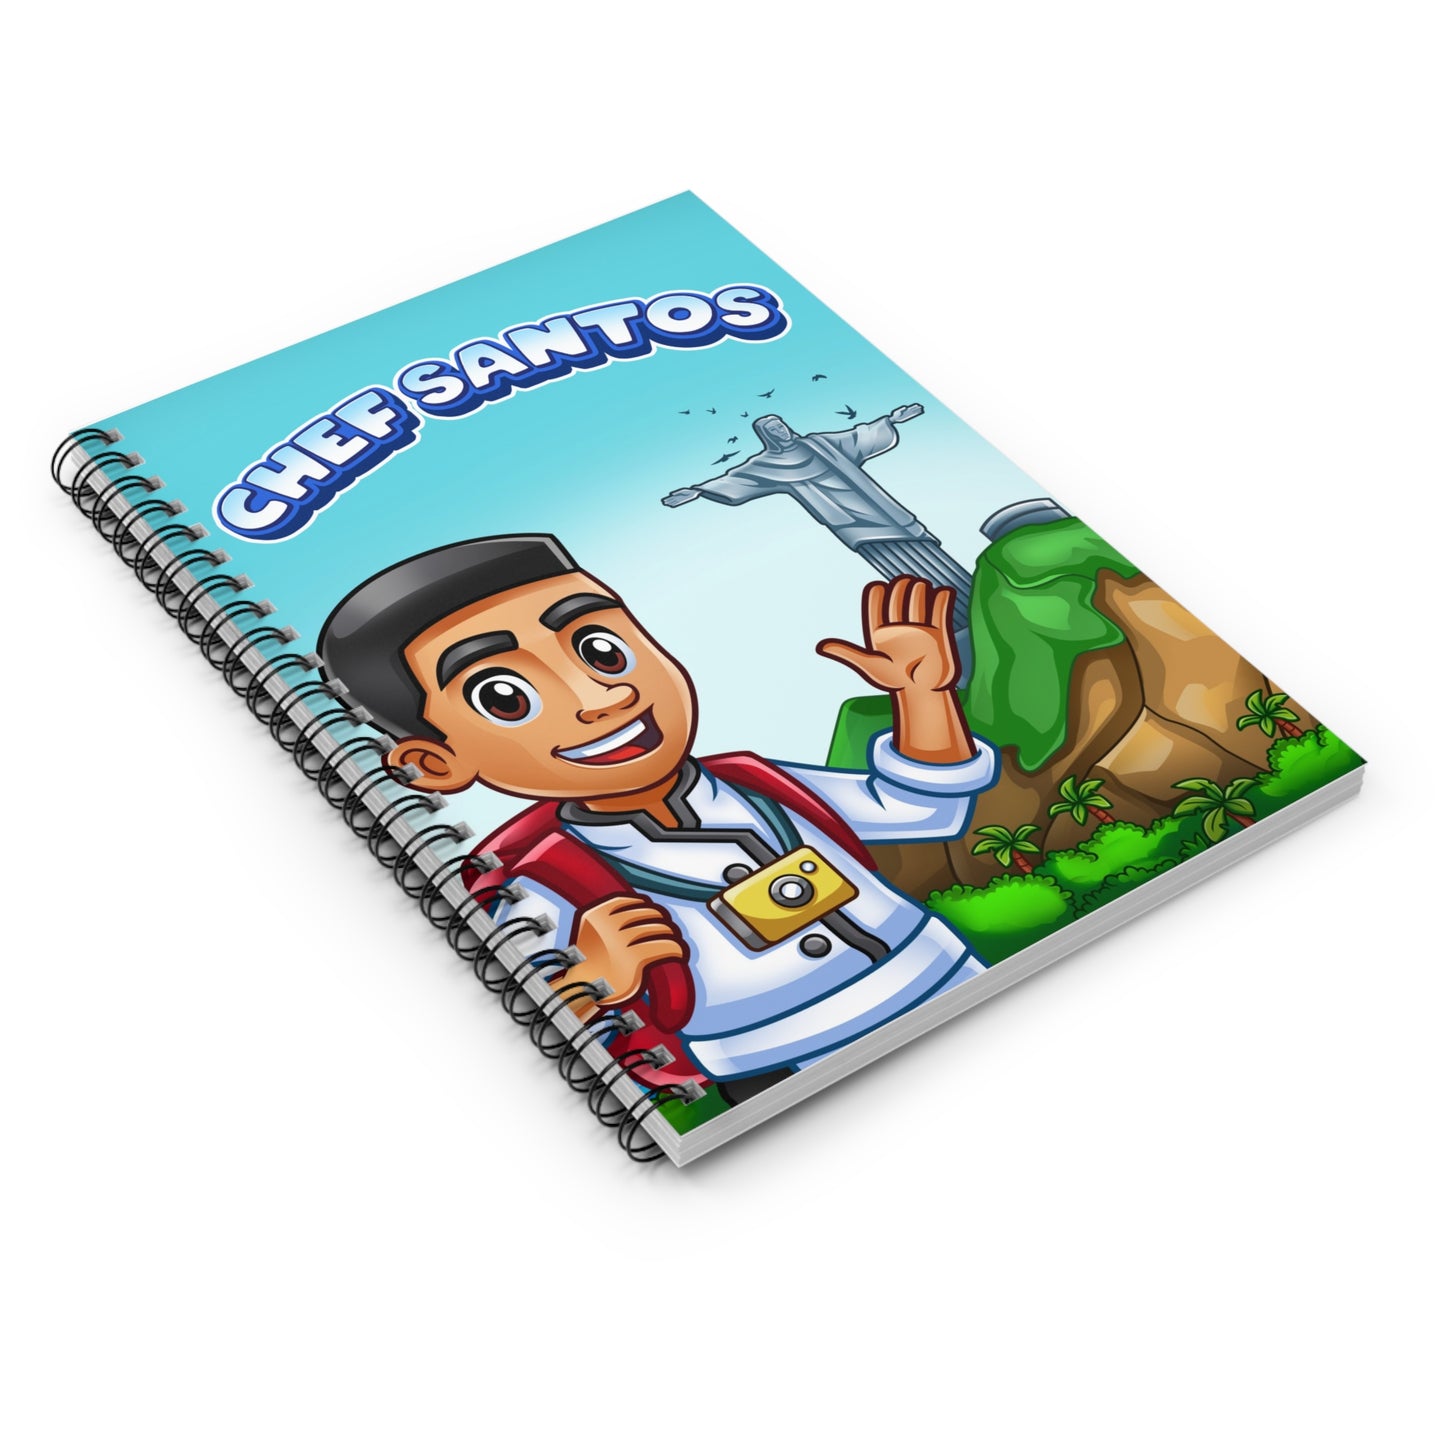 Chef Santos Spiral Notebook - Ruled Line